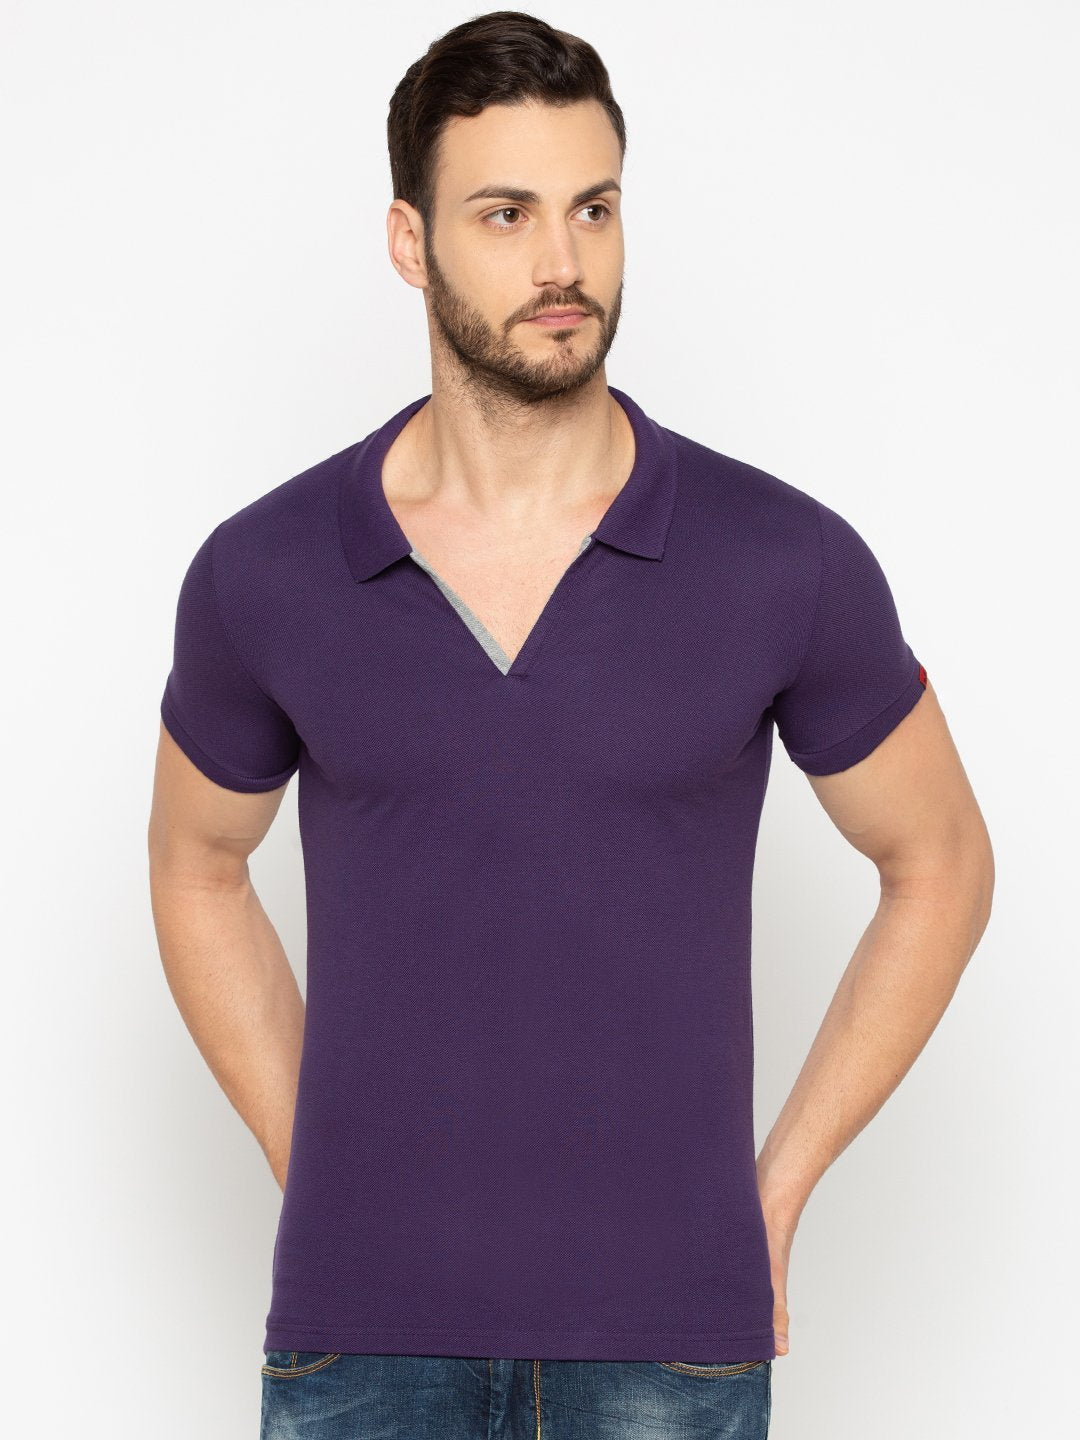 Purple Grape polo t shirt